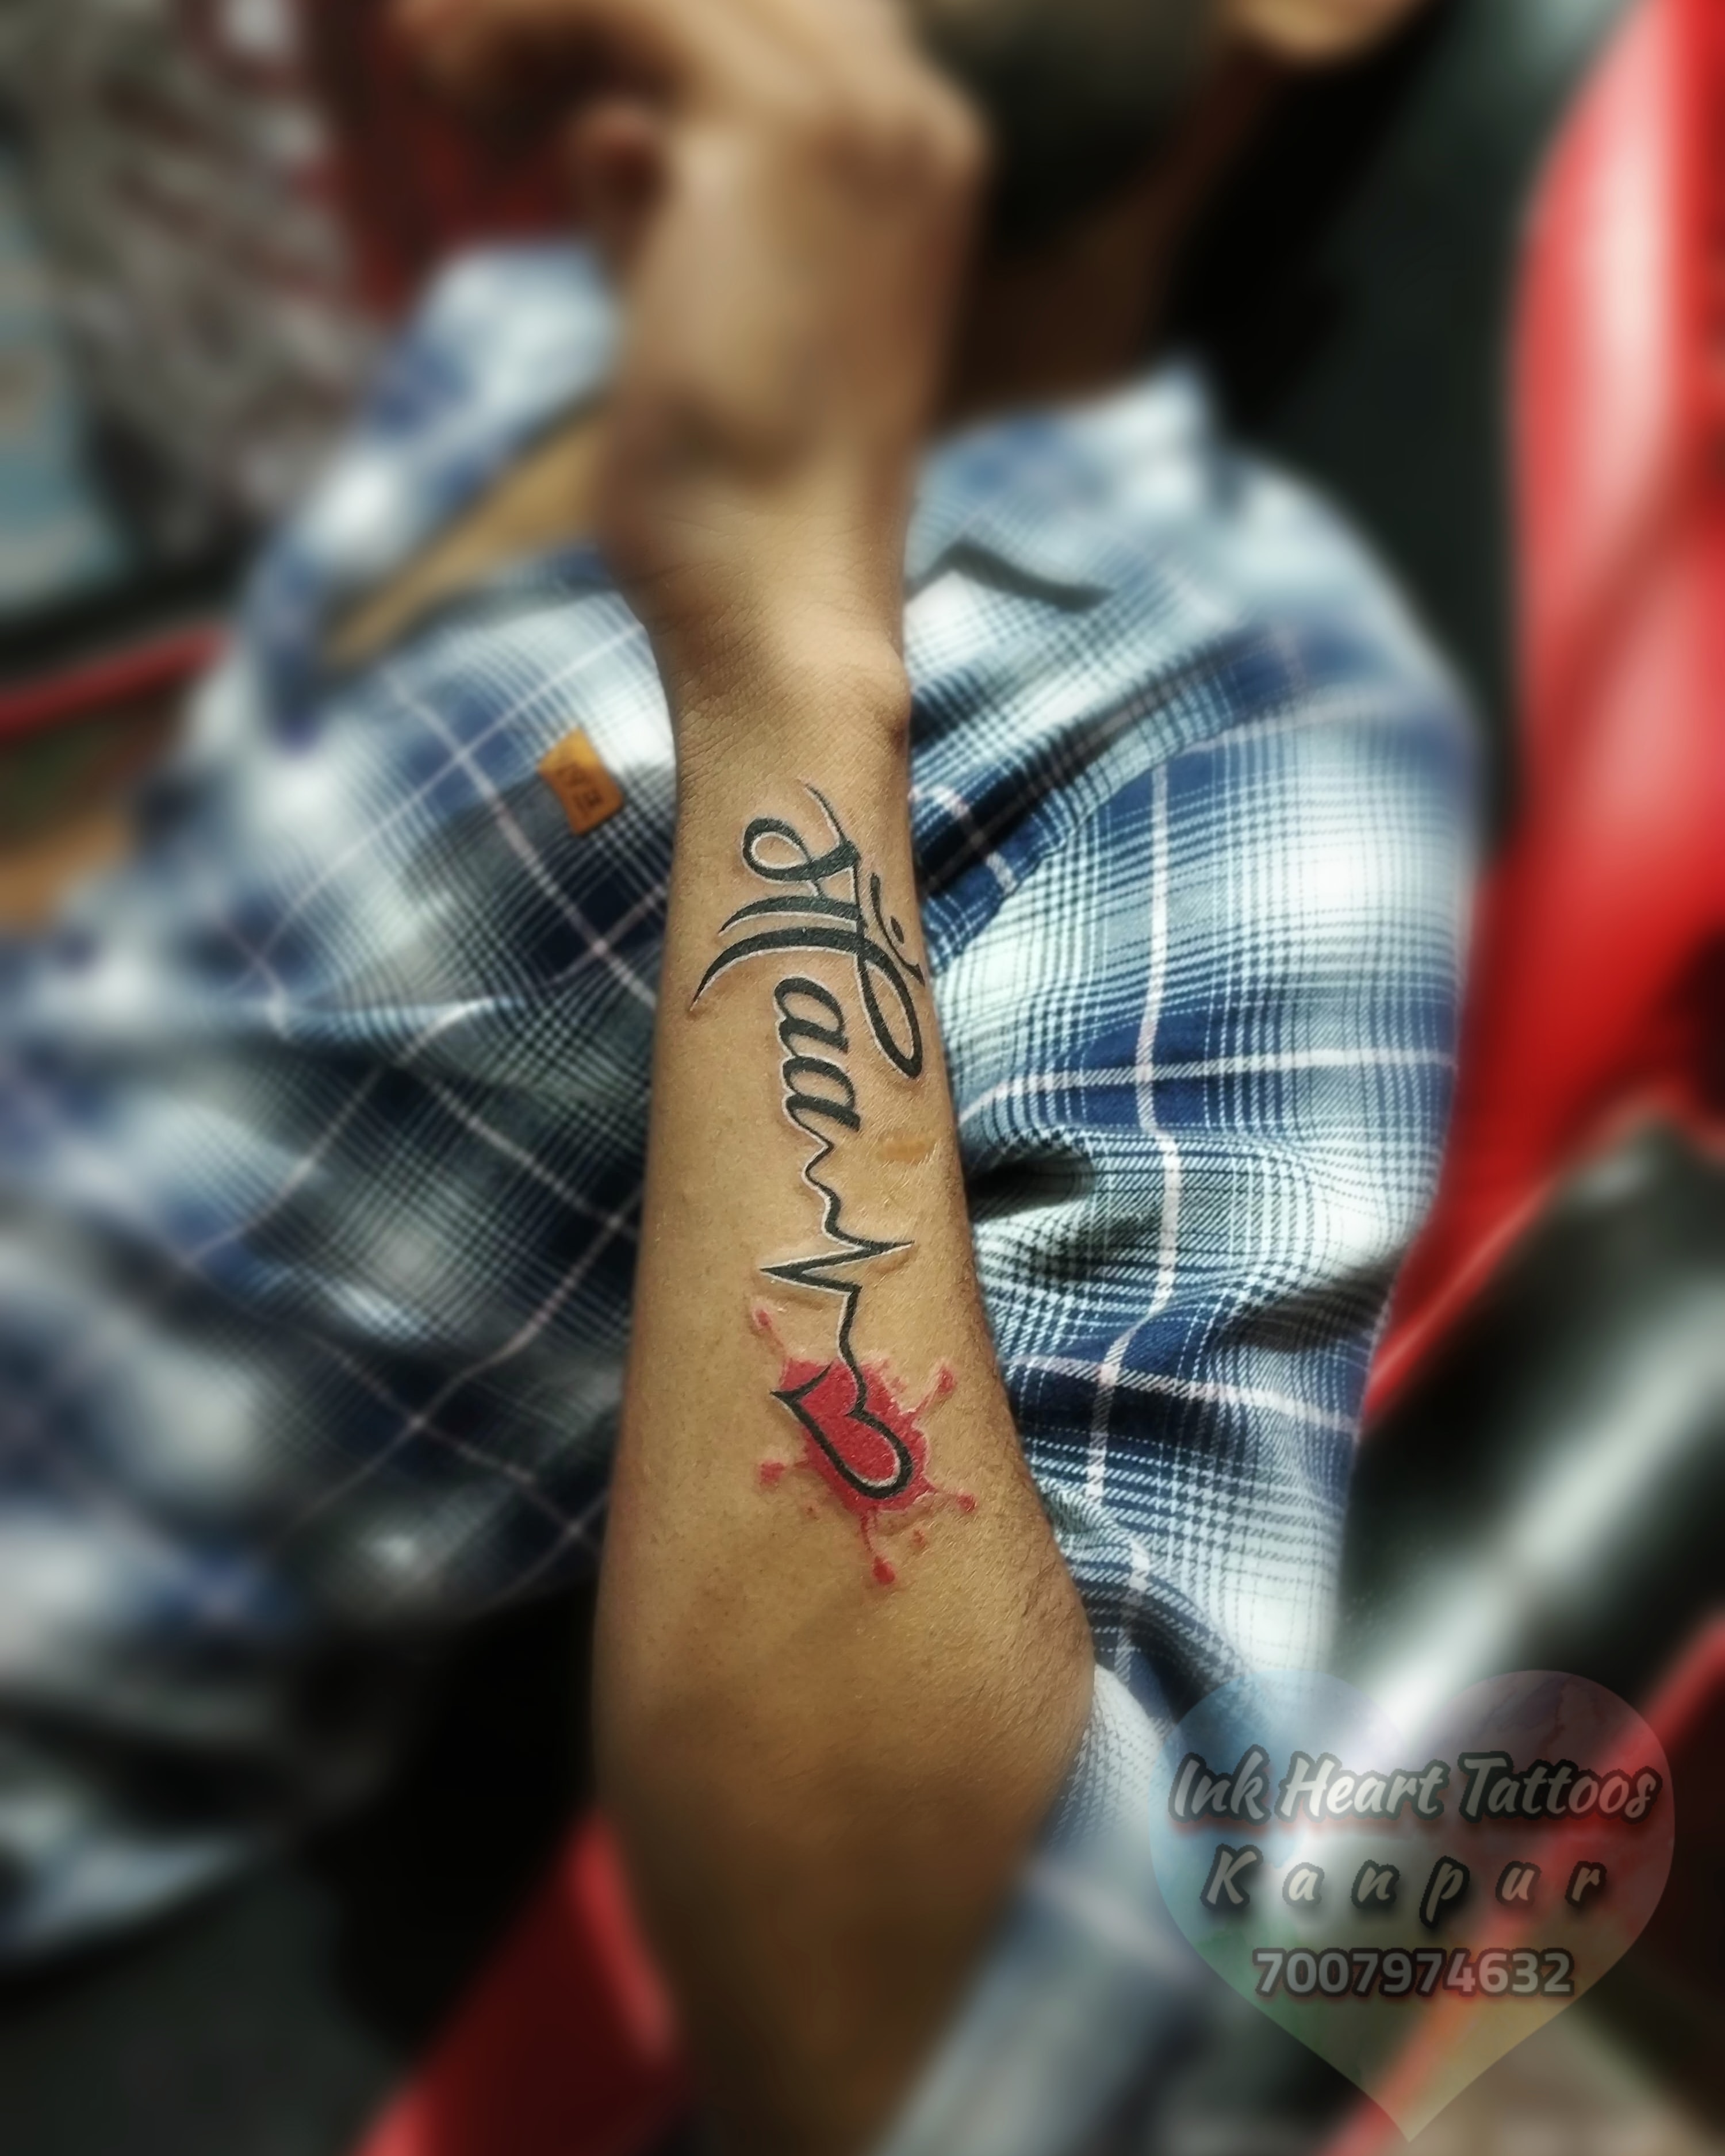 Sridhar name tattoo desing harendra Singh tattoo artist  sorts  video   yougube   YouTube